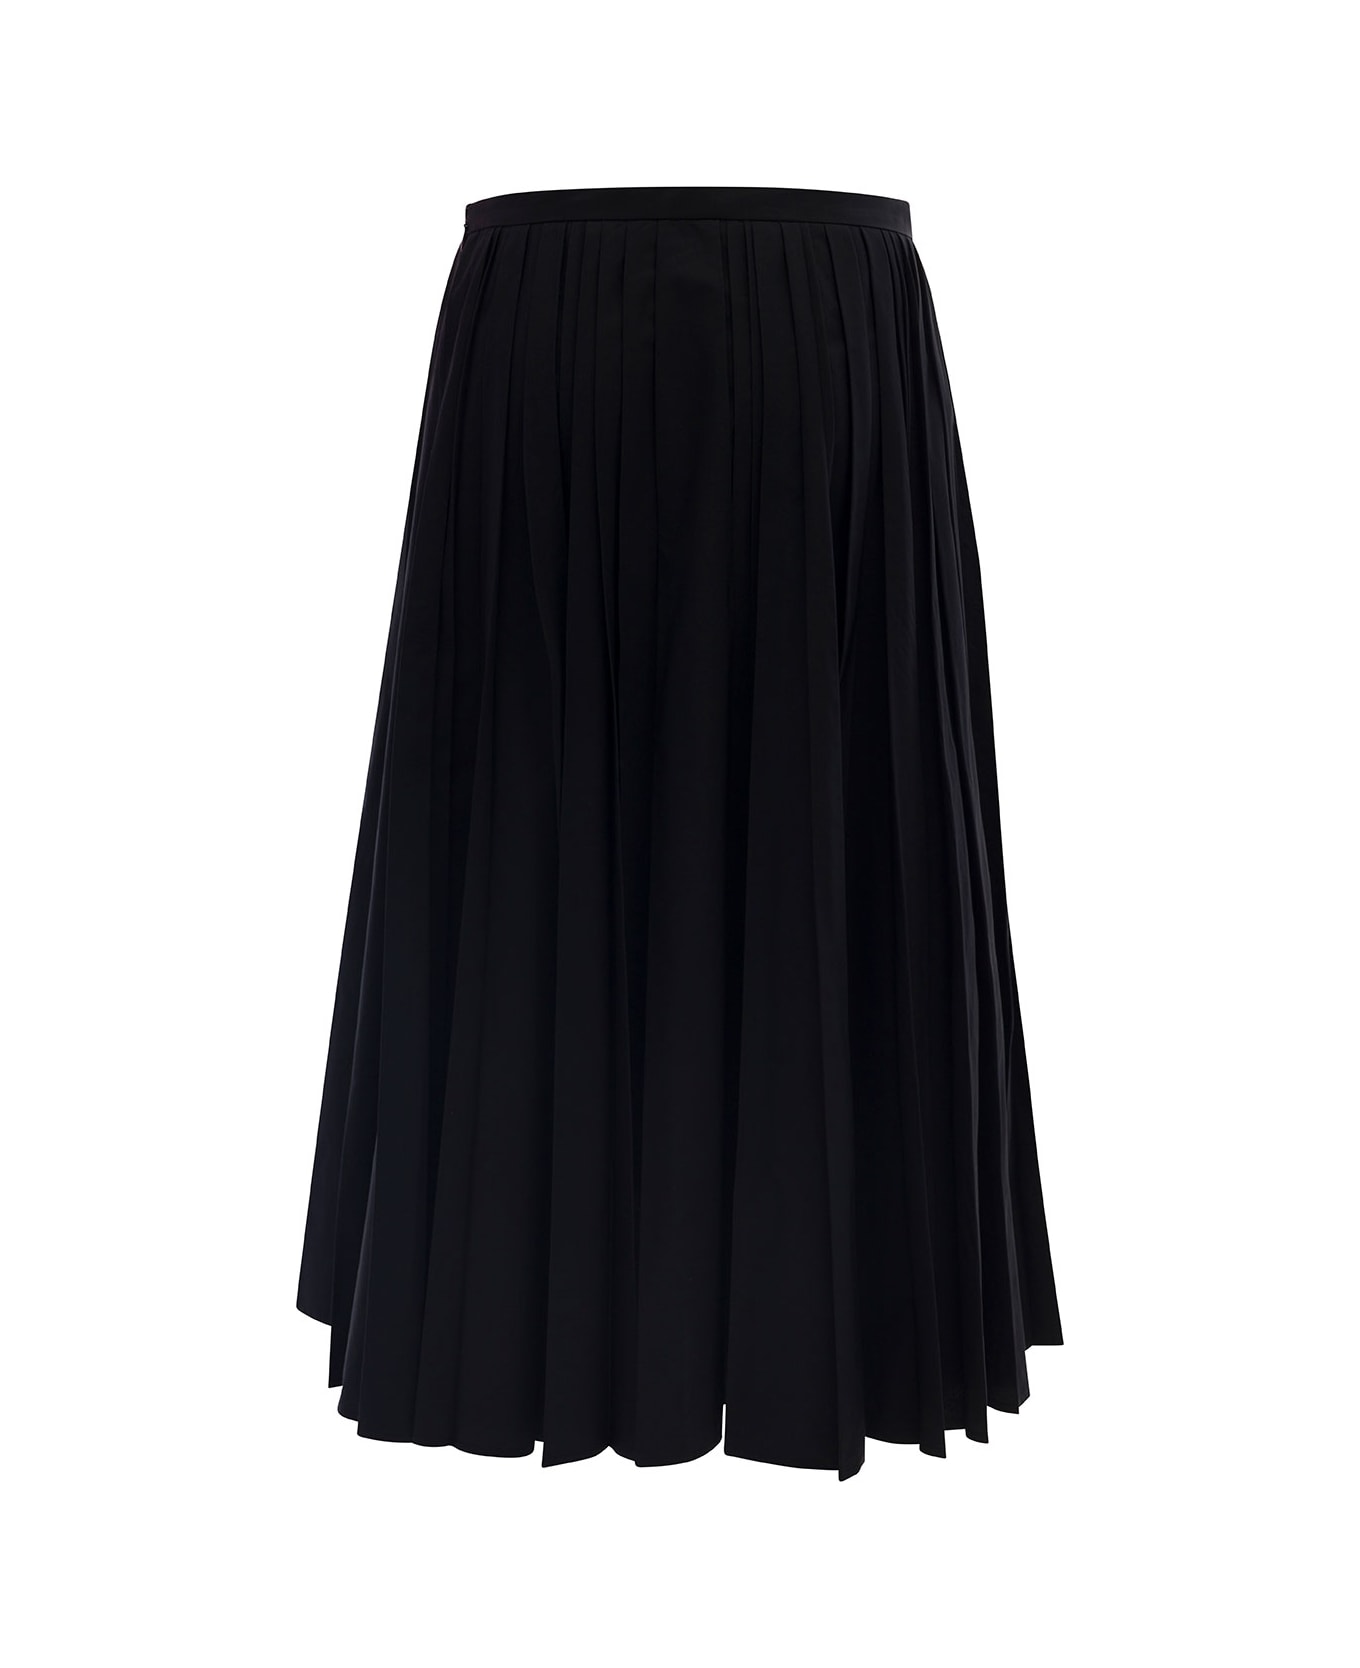 Philosophy di Lorenzo Serafini Midi Black Pleated Skirt In Lighttaffeta Woman - Black